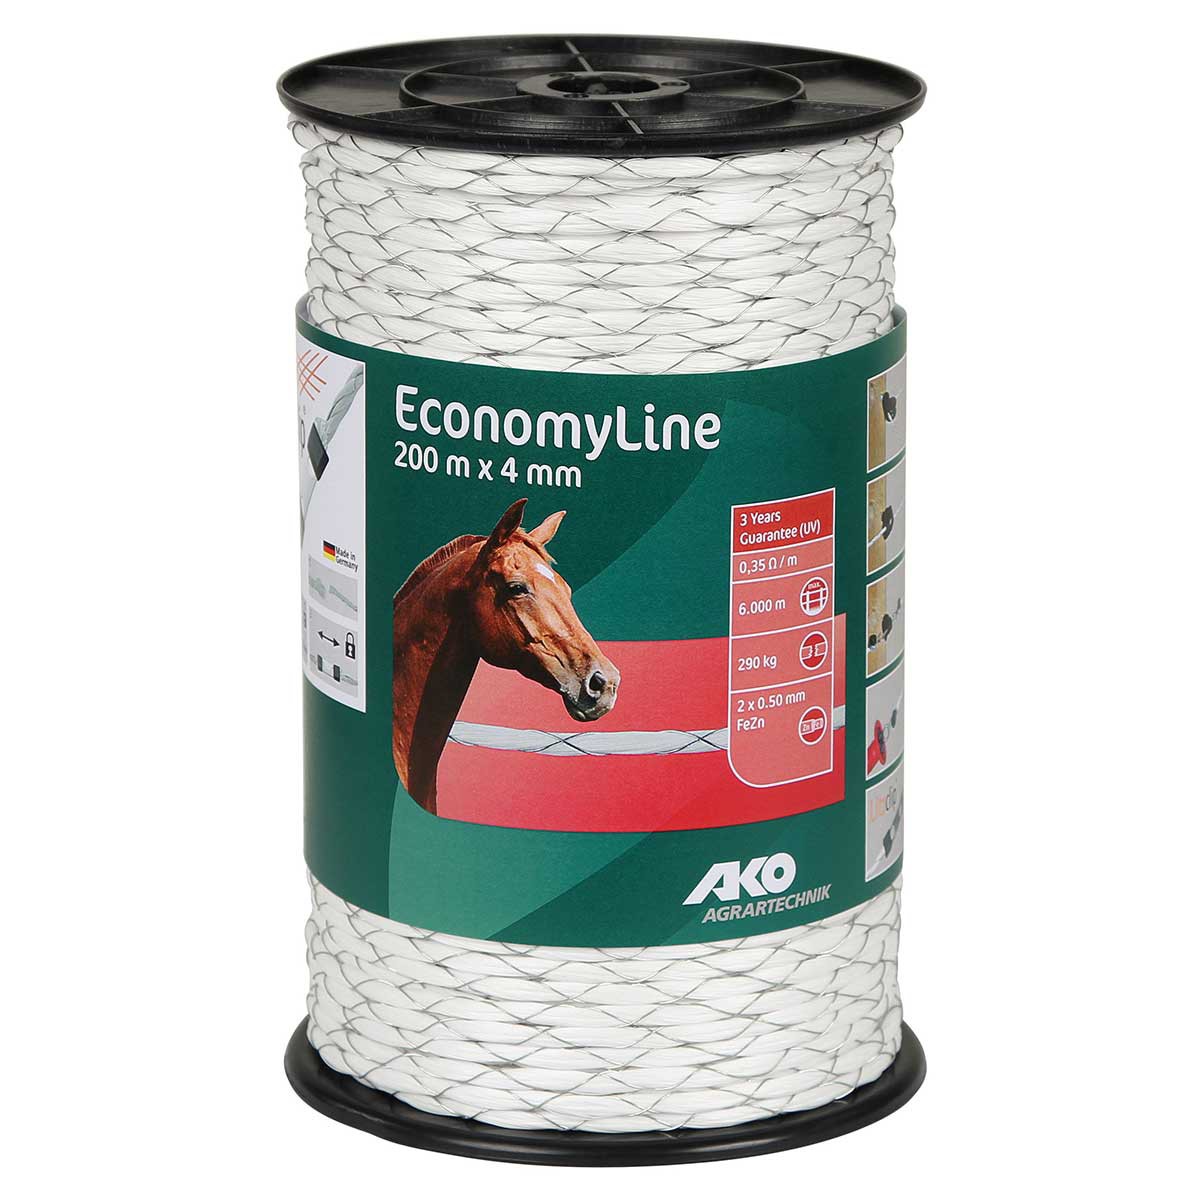 Ako Pasture Fence Rope EconomyLine cross-wound 200m, Ø 4mm, 2x0.50 FeZn